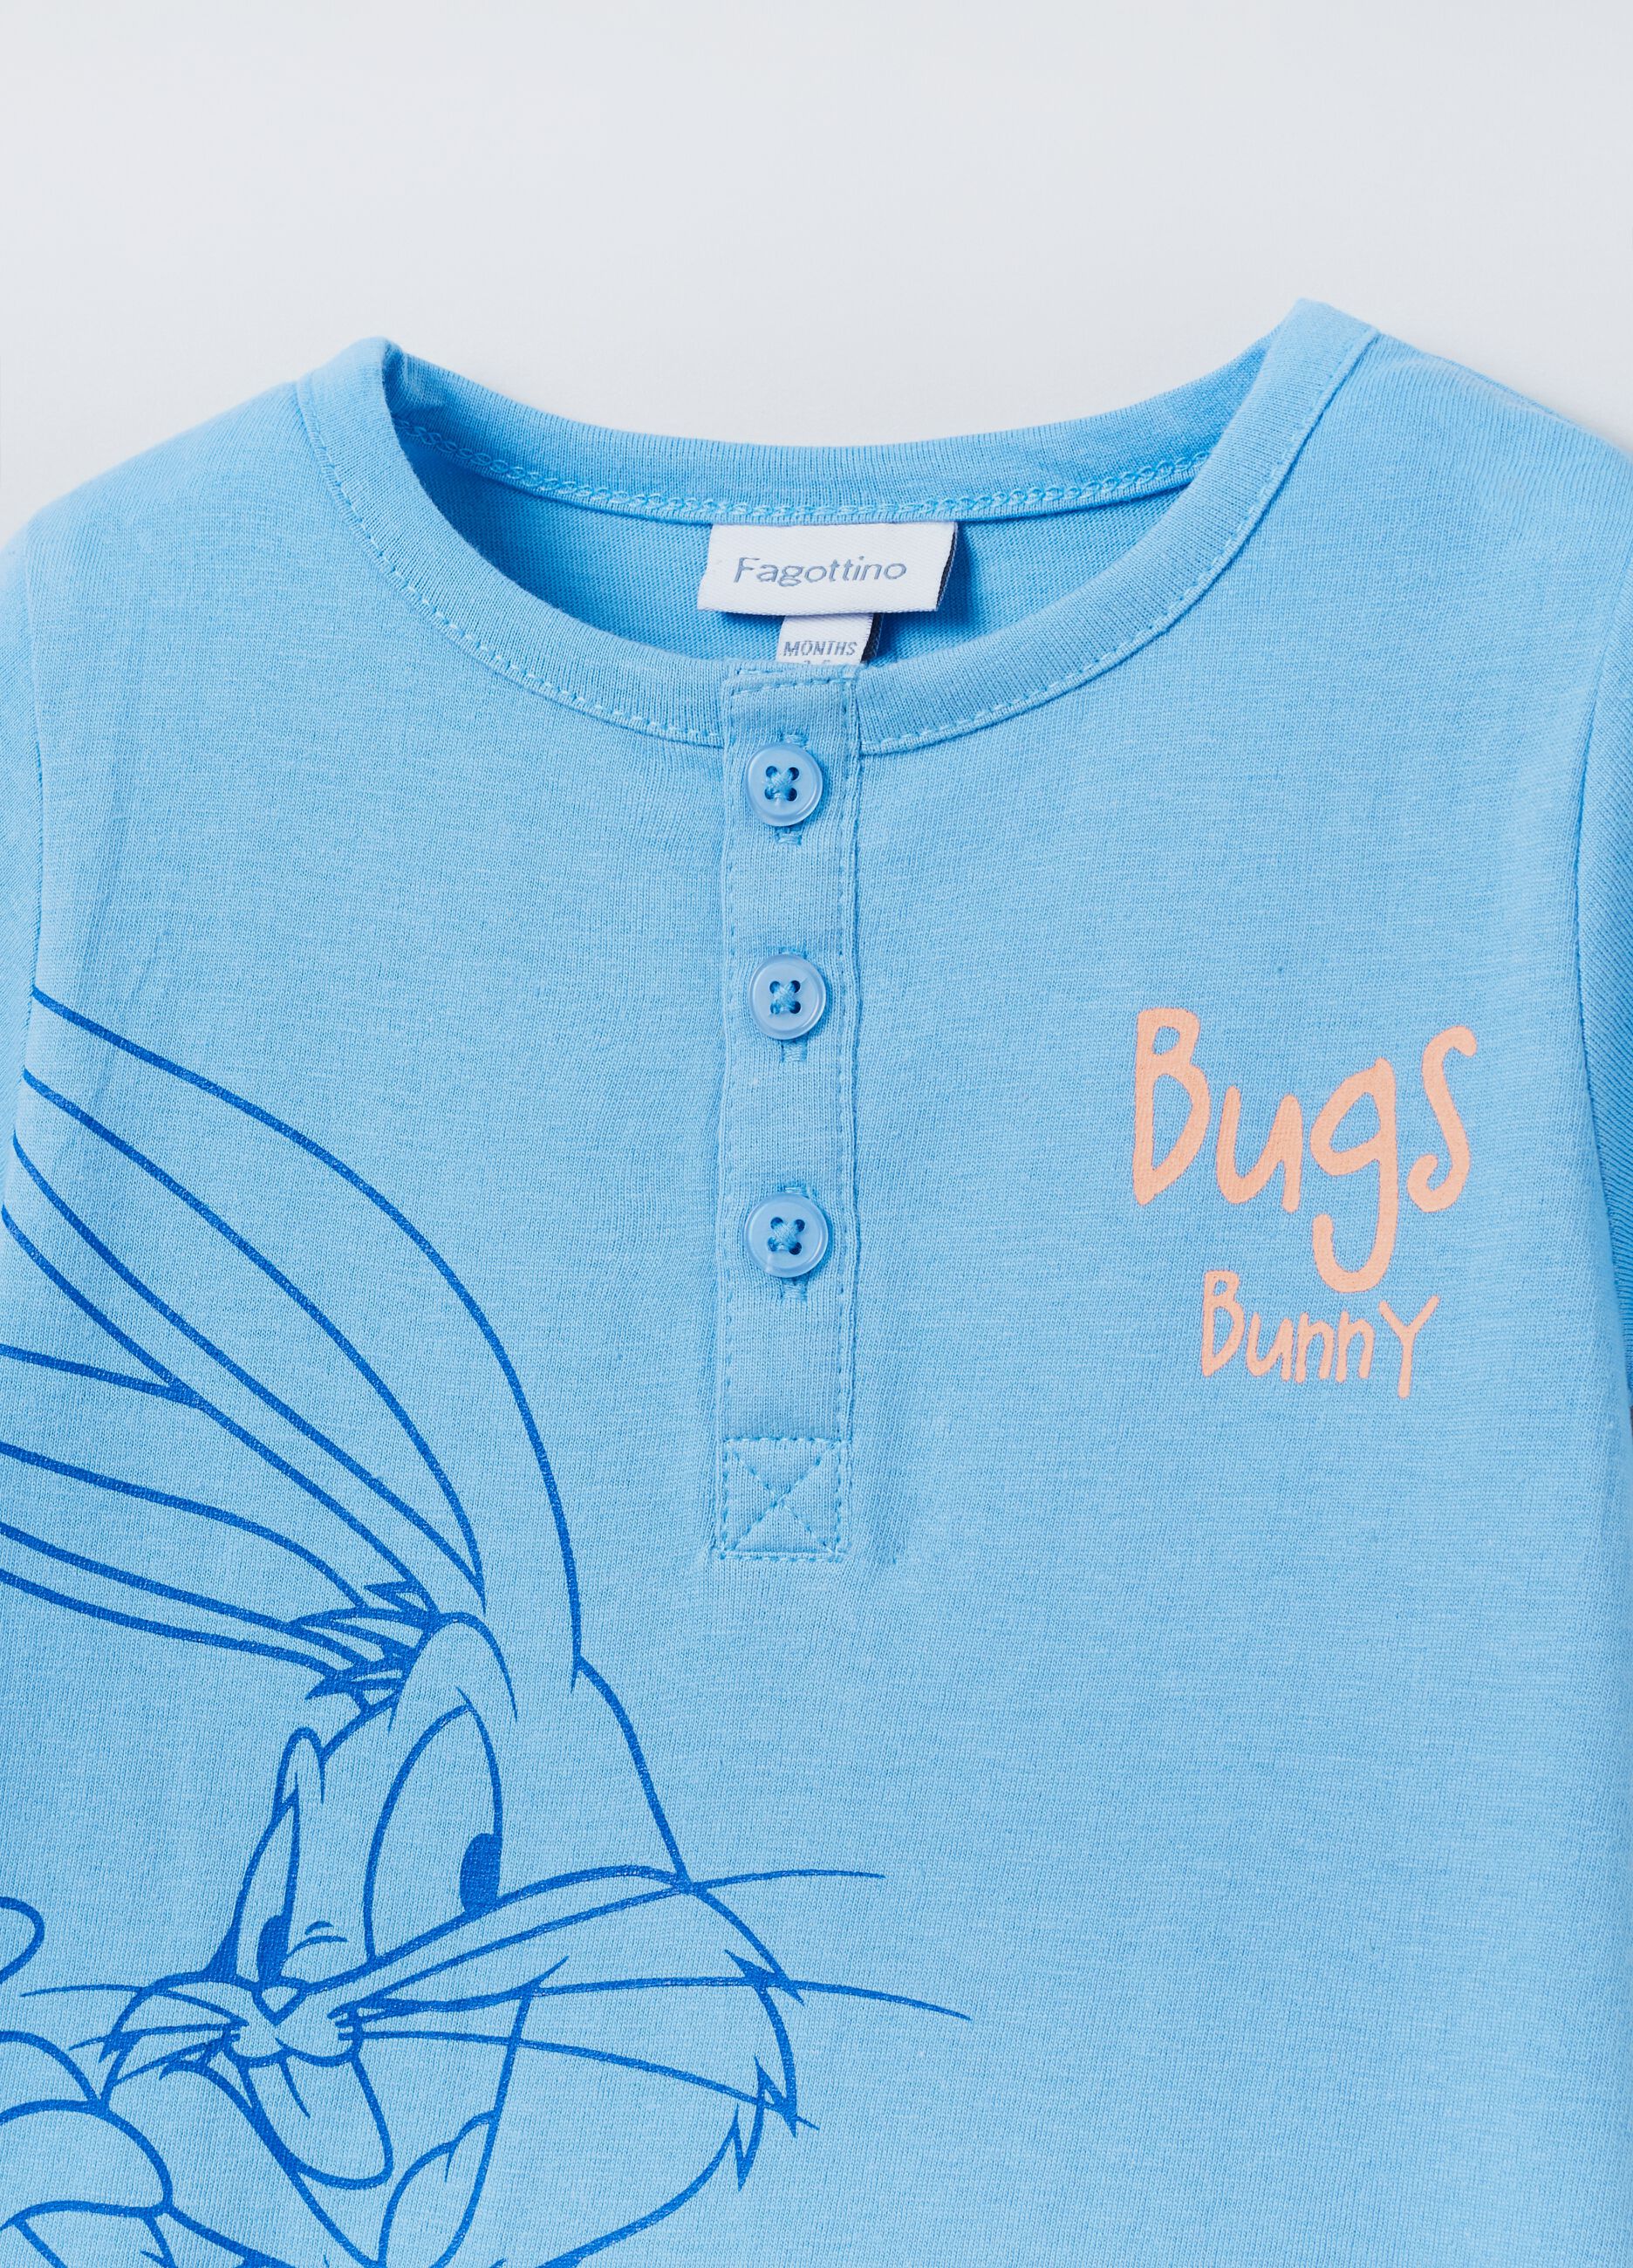 Pelele pijama estampado Bugs Bunny